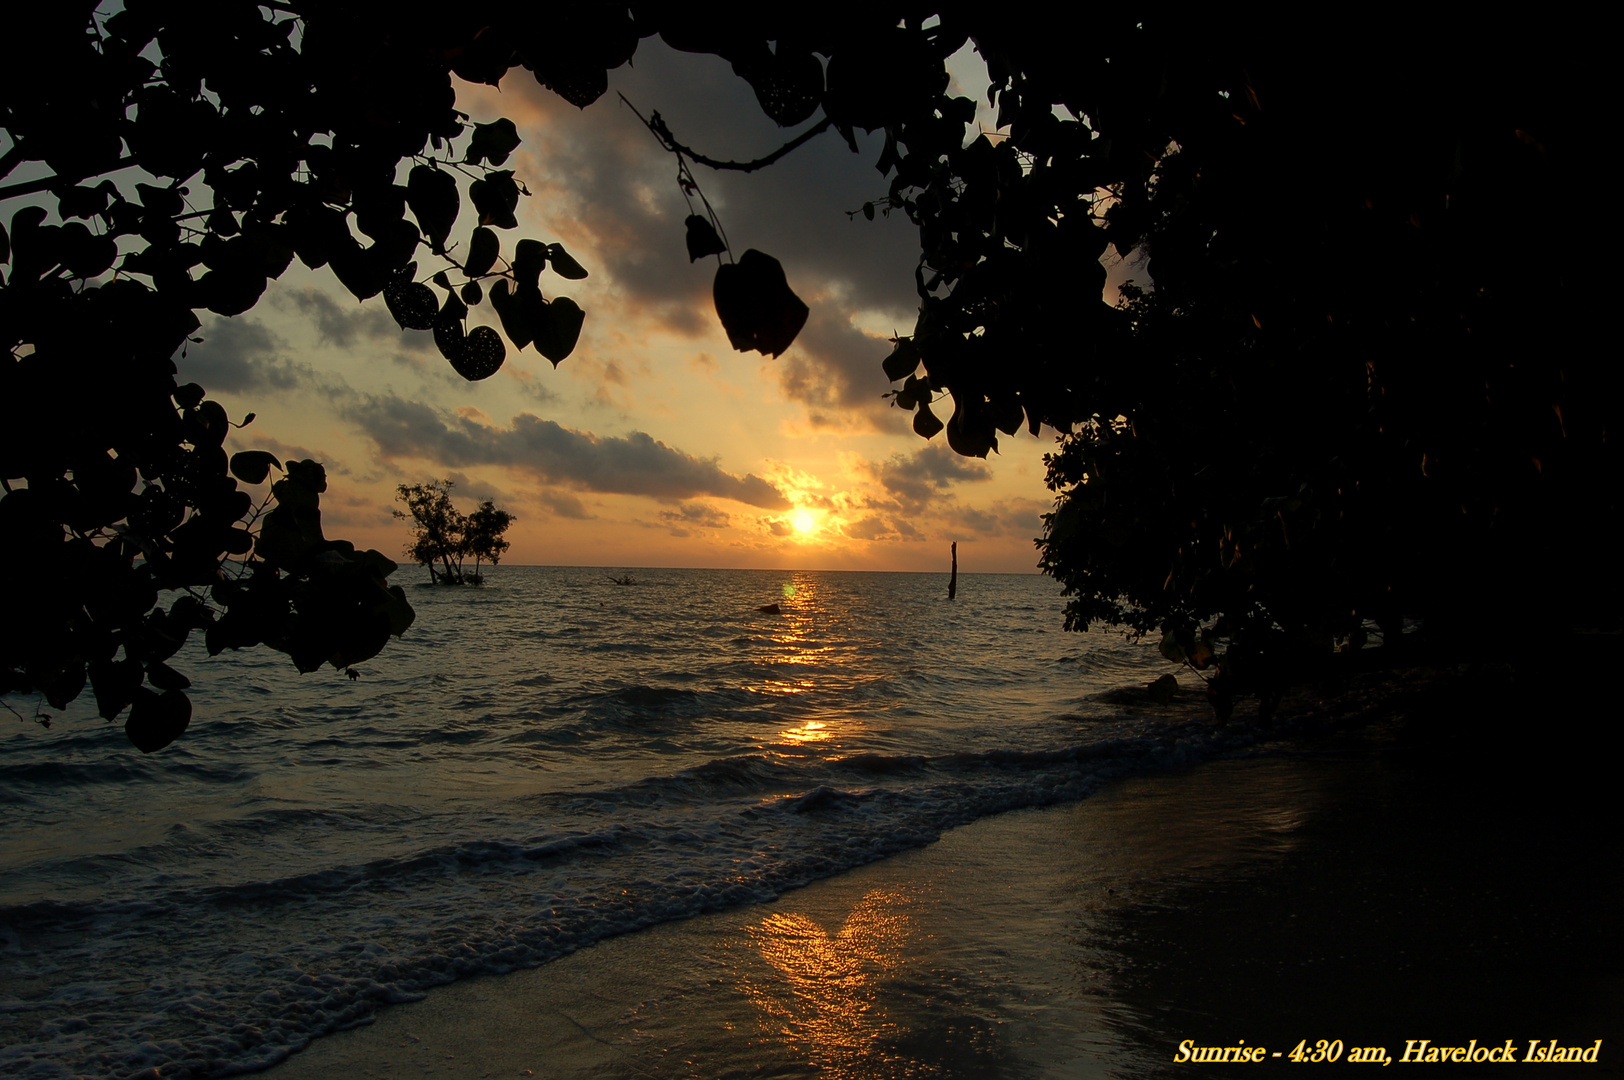 Sunrise at Havelock Island (Andaman & Nicobar Islands - INDIA)